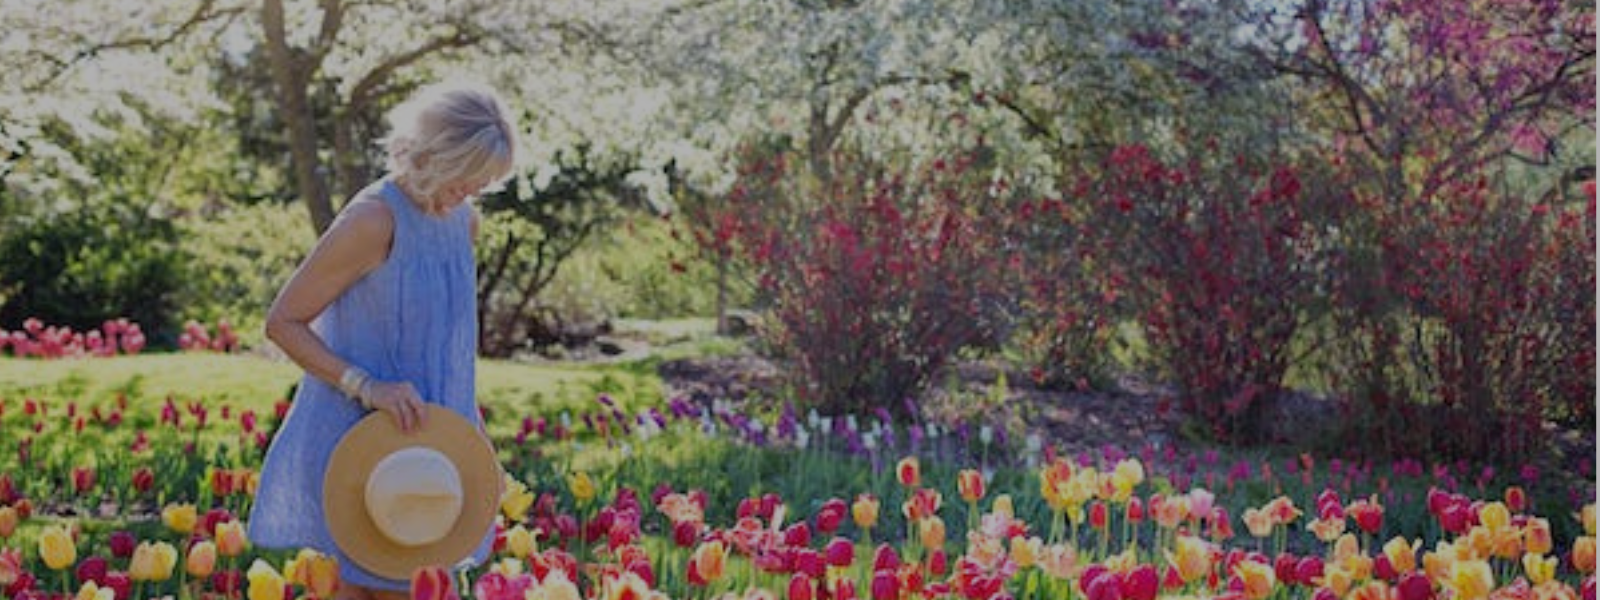 Shea Tulip Pant for Women, Sustainable Fashion